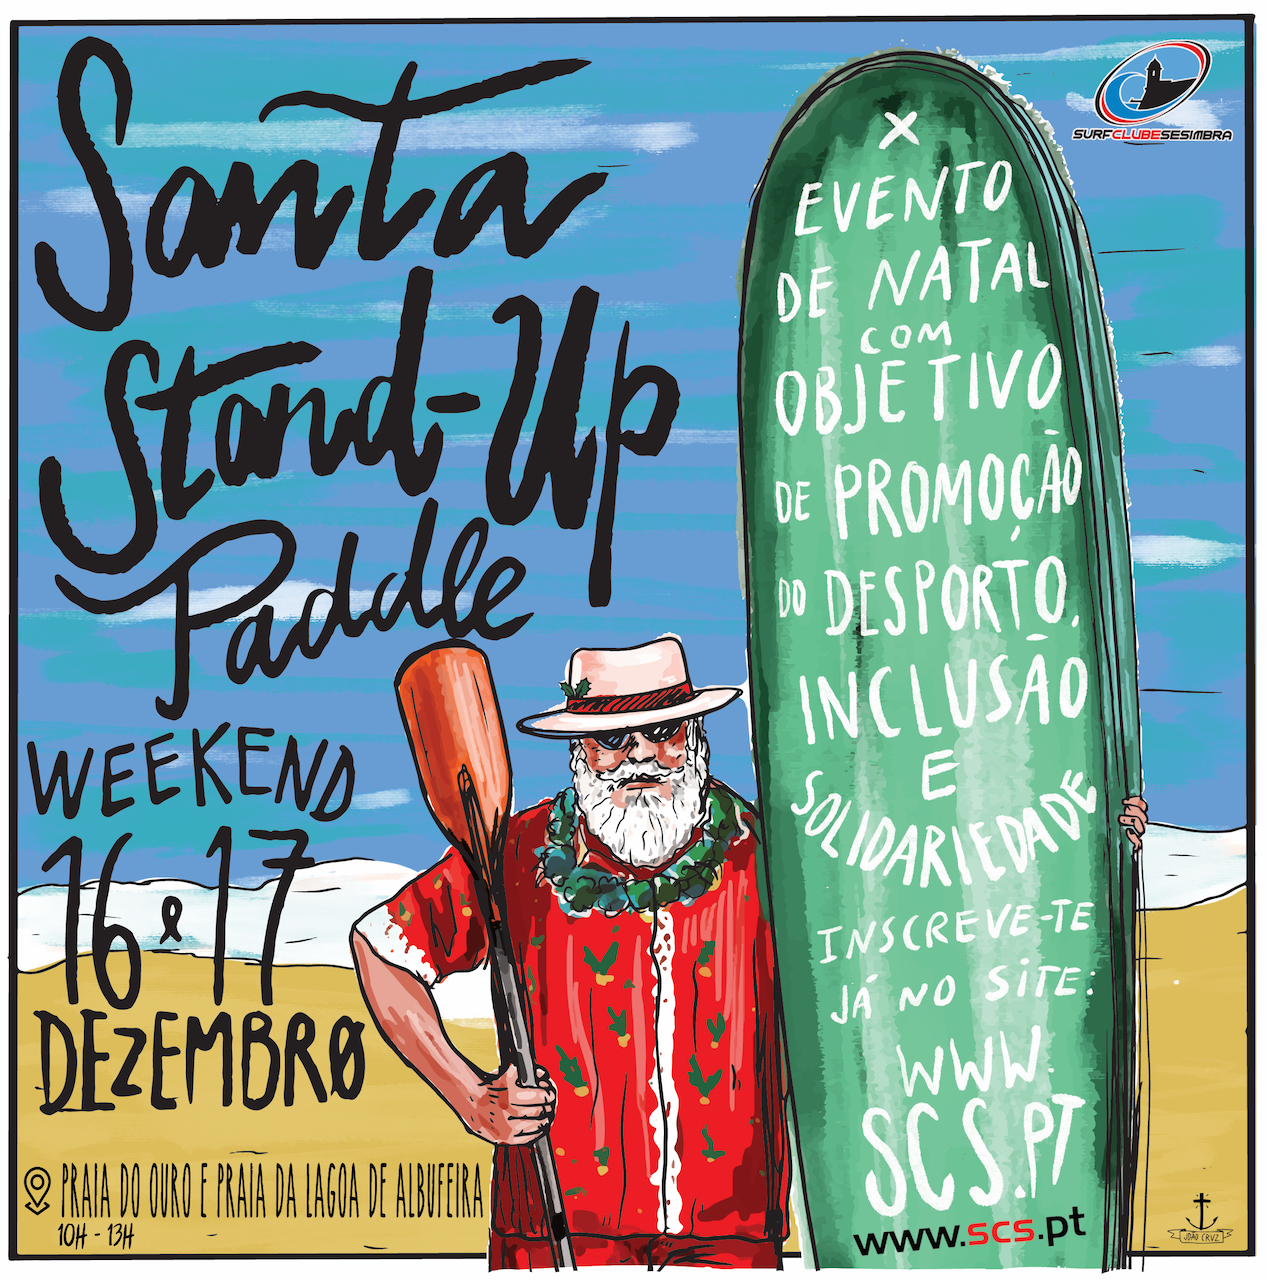  Remada do Natal em Stand-Up Paddle Boarding - dia 16 dezembro